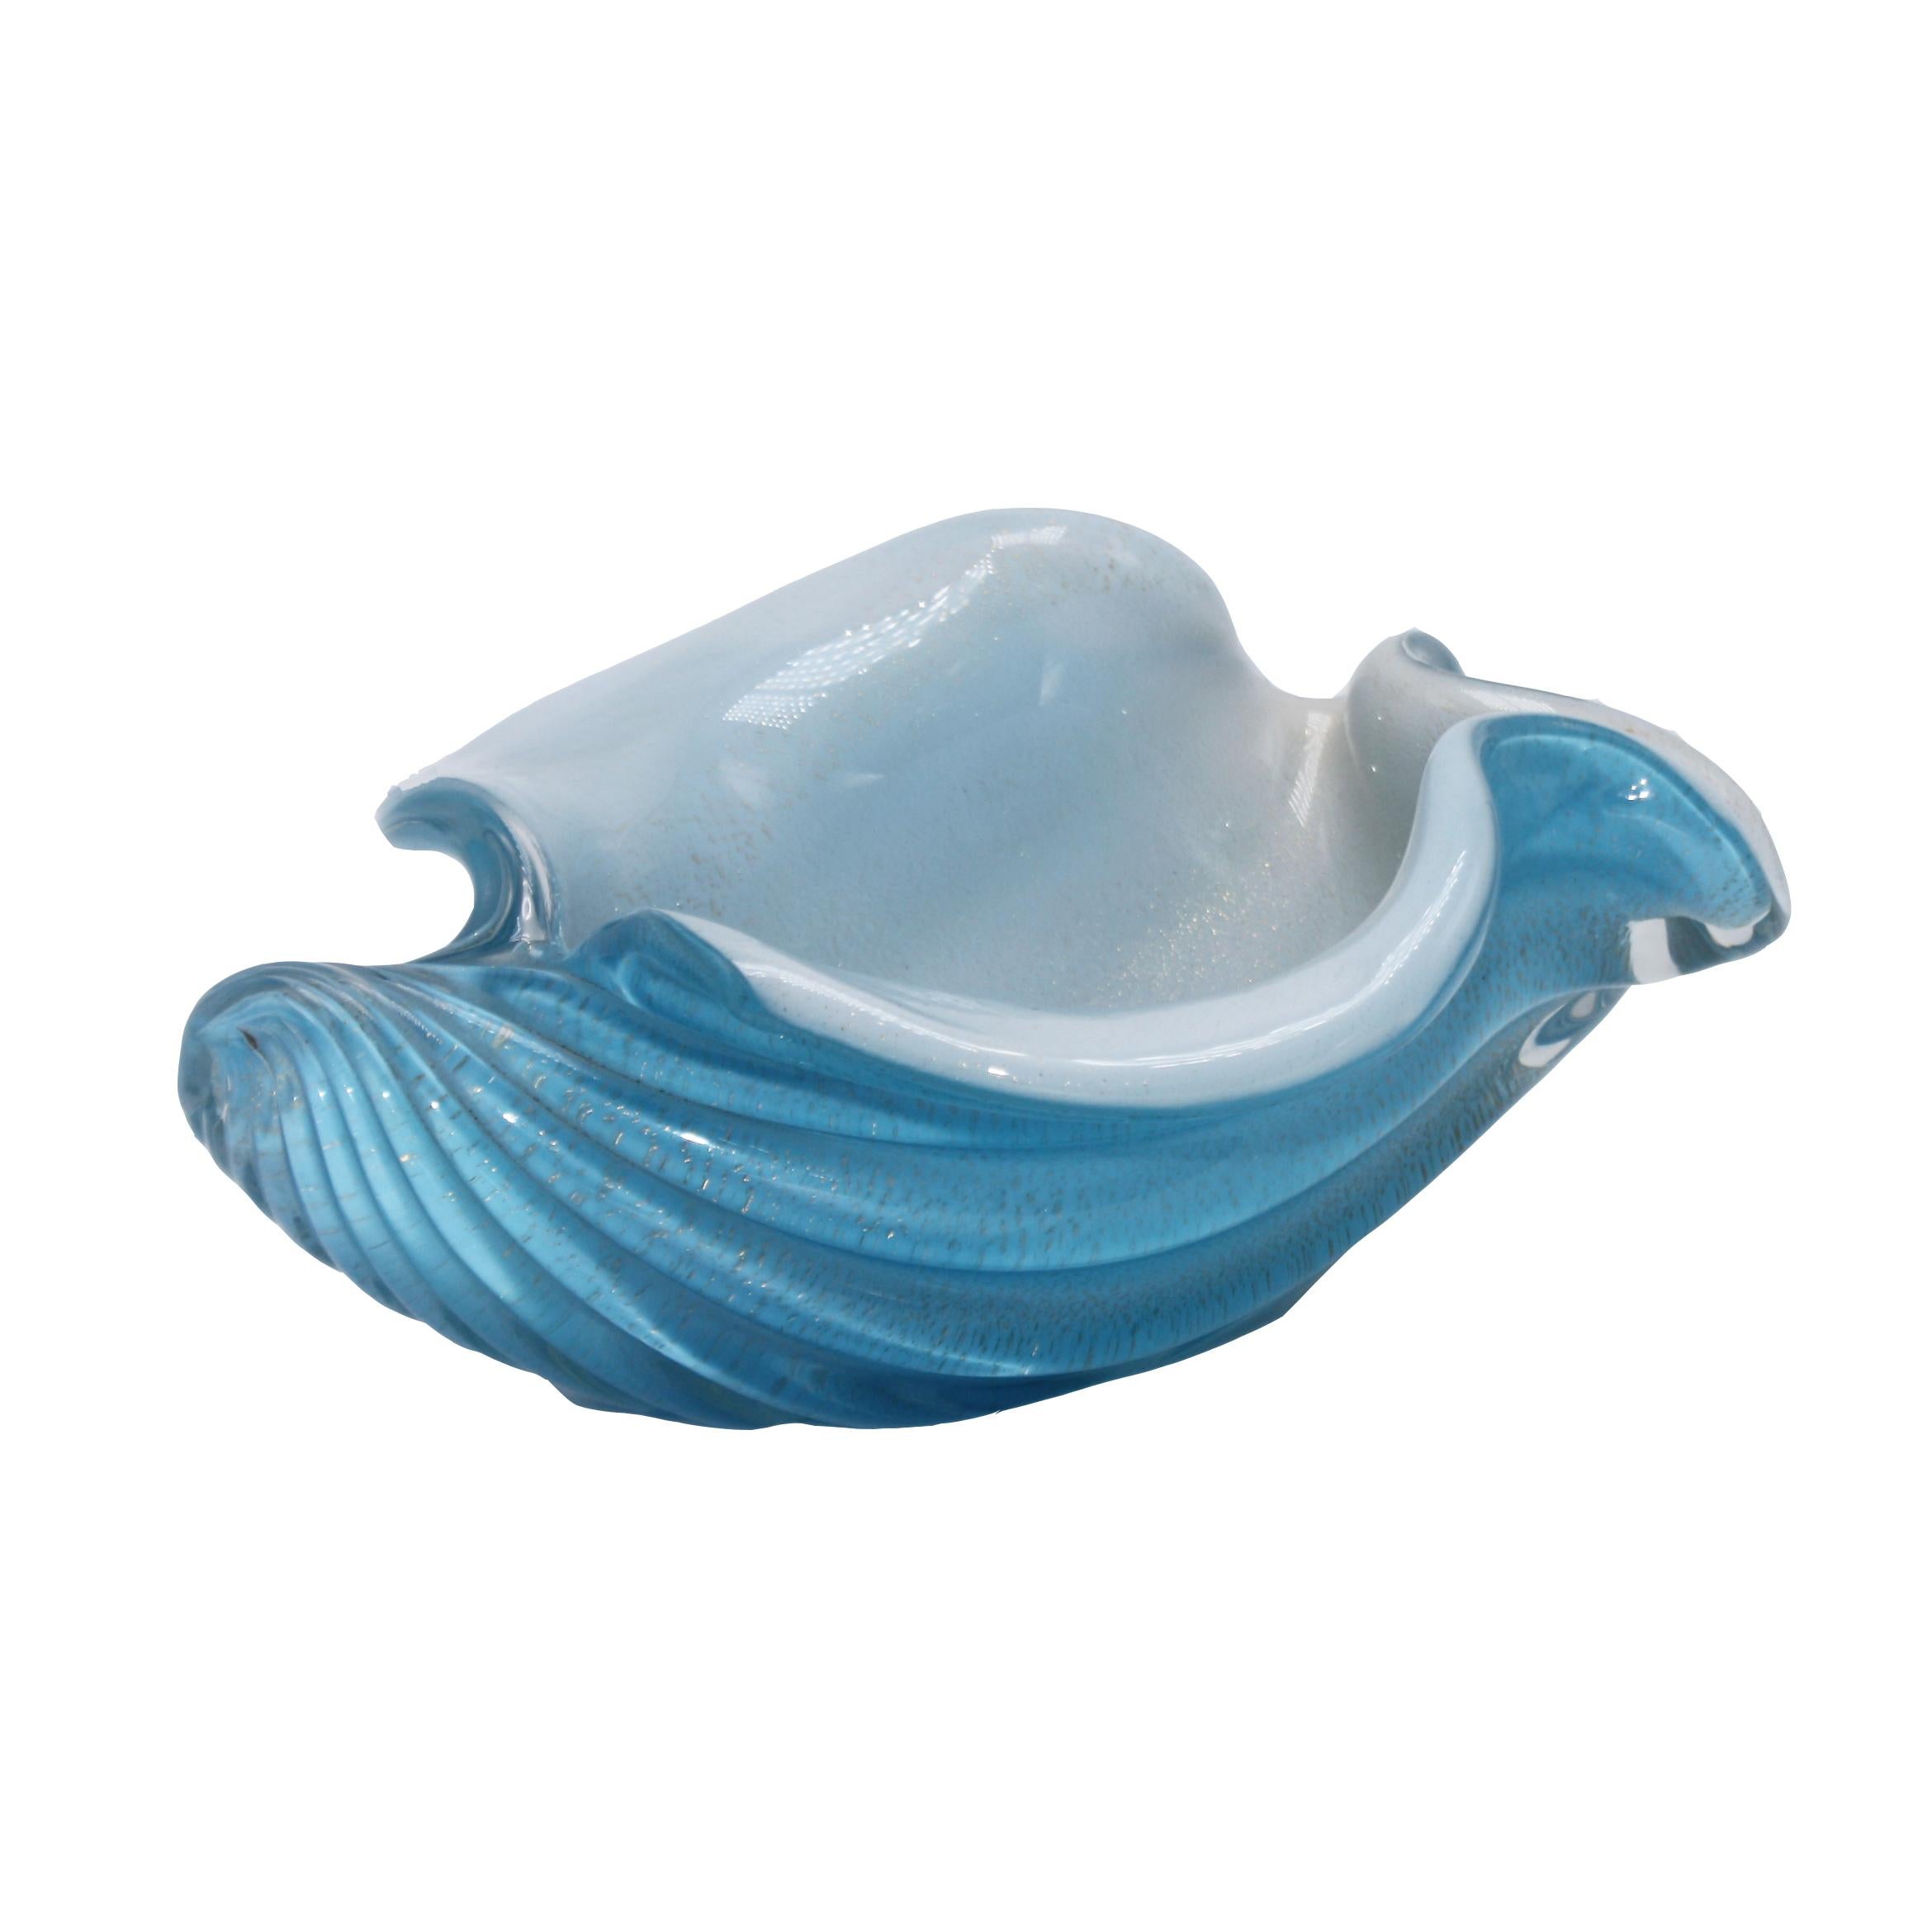 Murano blue and white shell bowl, circa 1960.